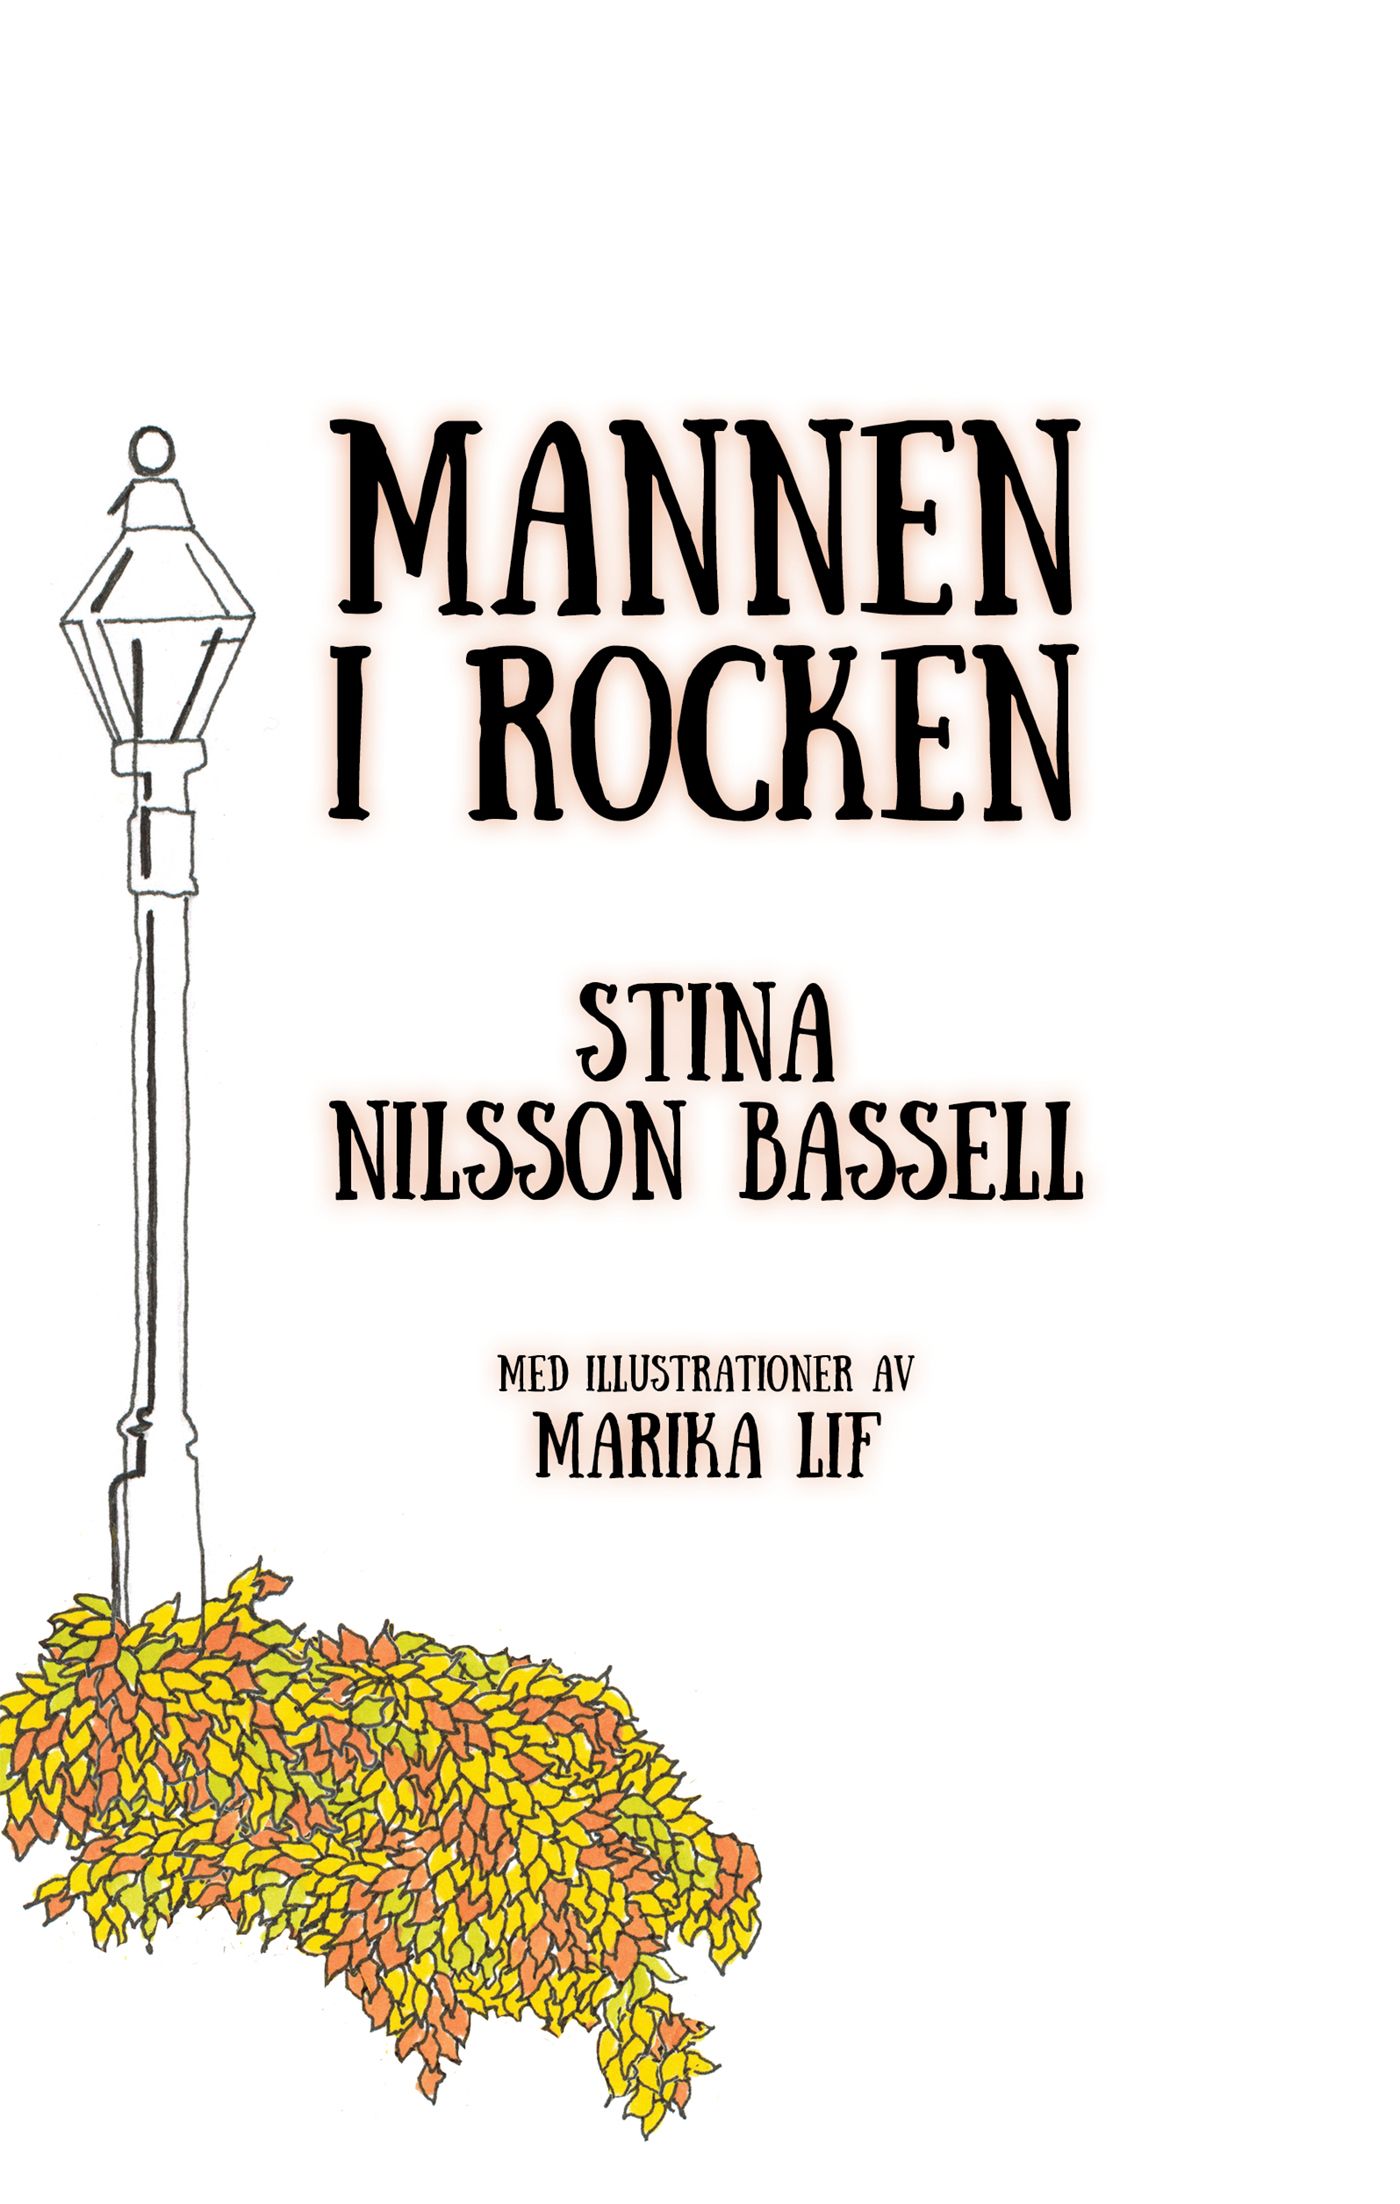 Mannen i rocken, e-bok av Stina Nilsson Bassell